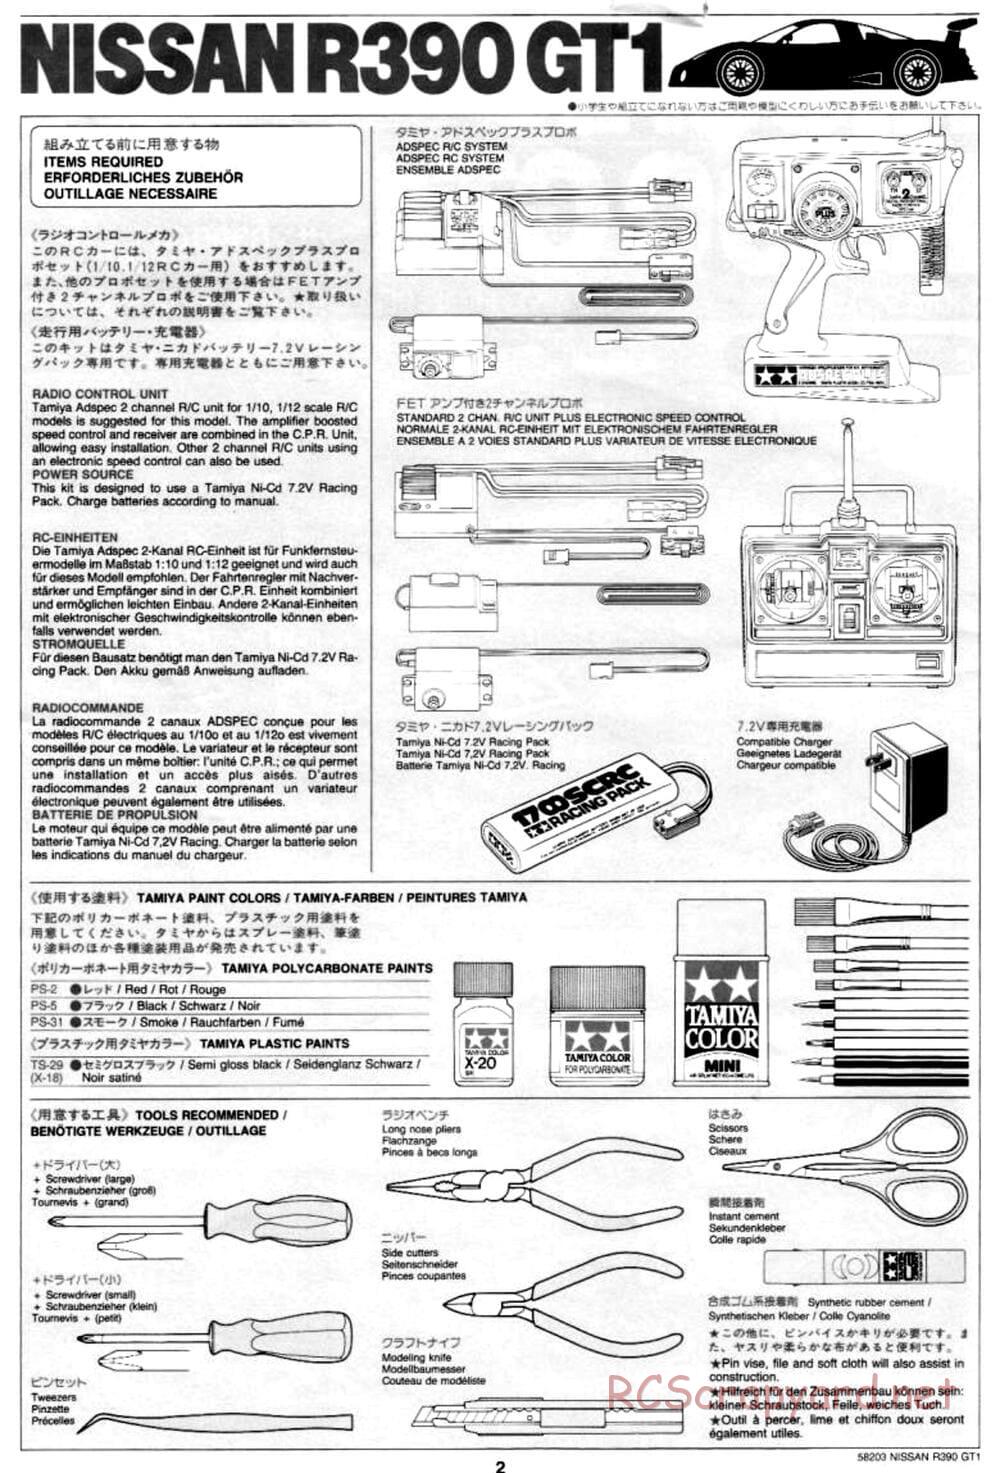 Tamiya - Nissan R390 GT1 - TA-03R Chassis - Manual - Page 2